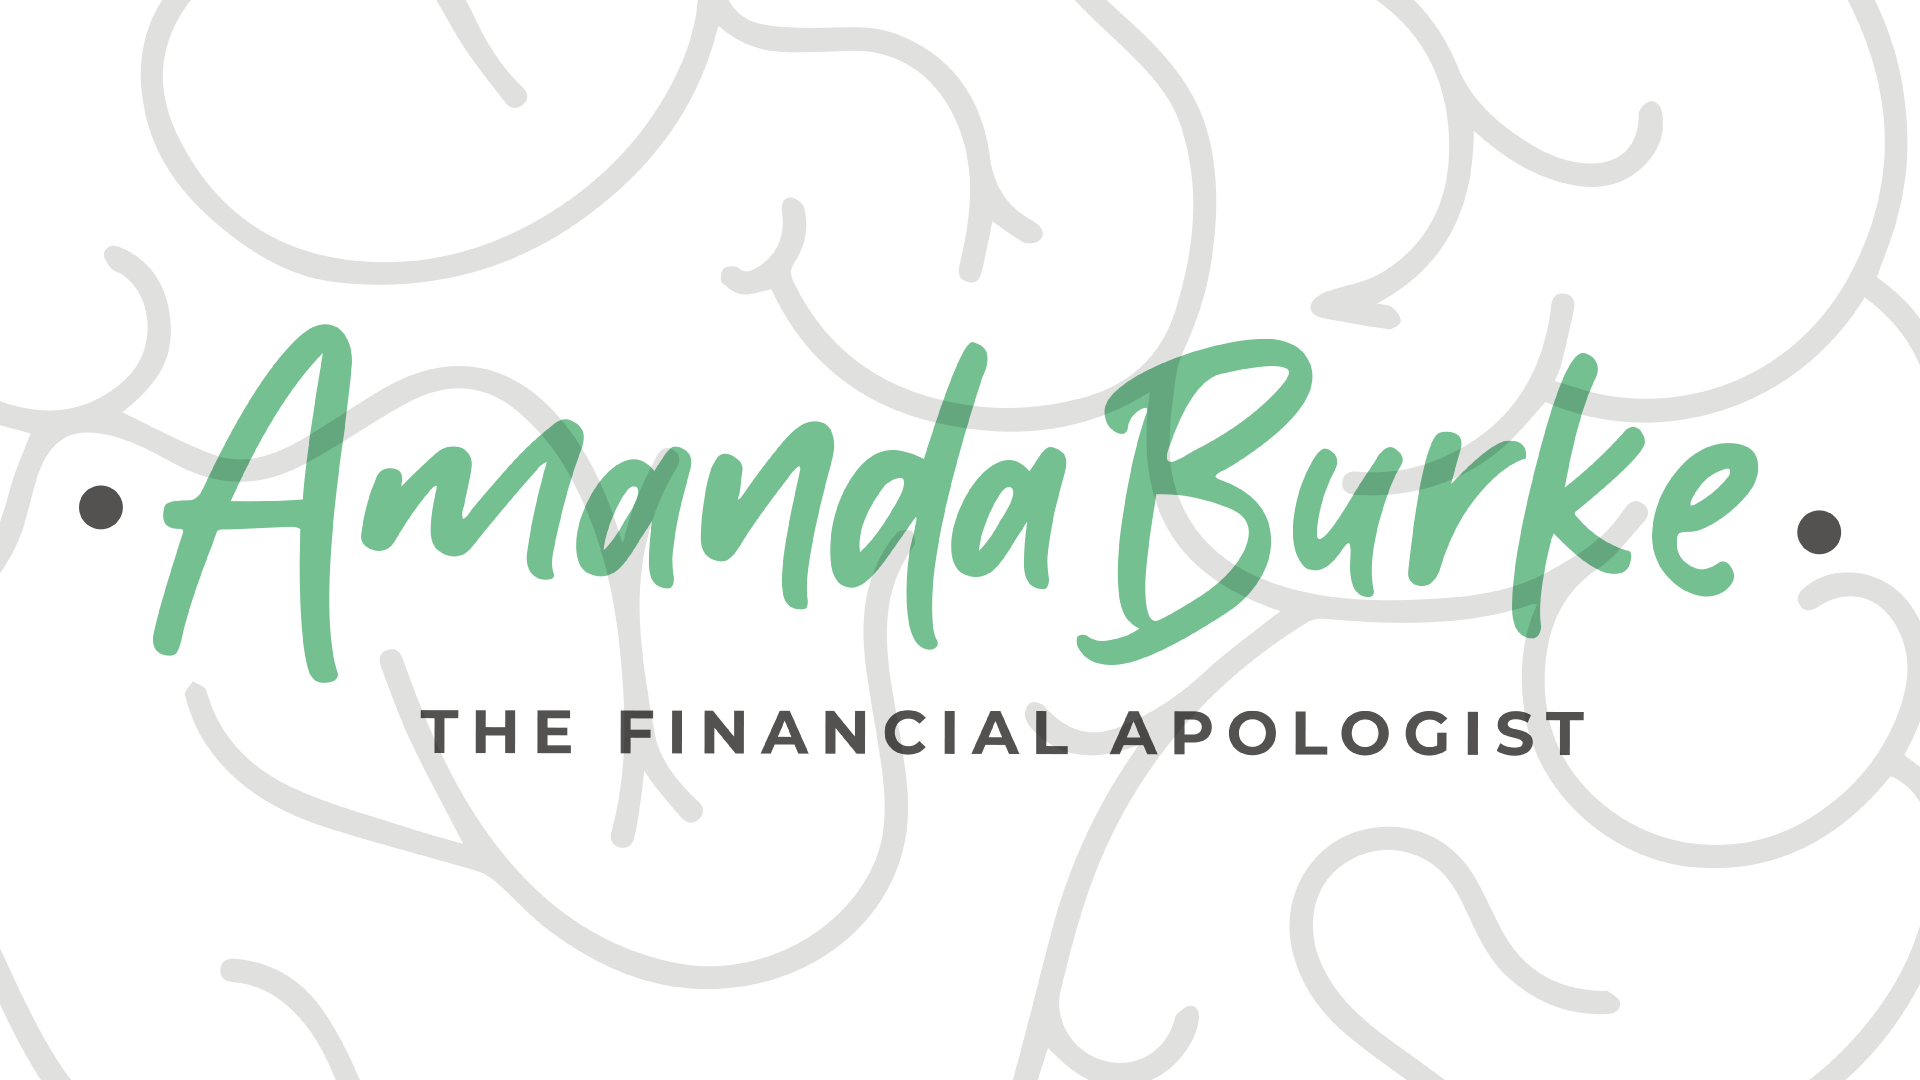 Title: Amanda Burke the Financial Apologist